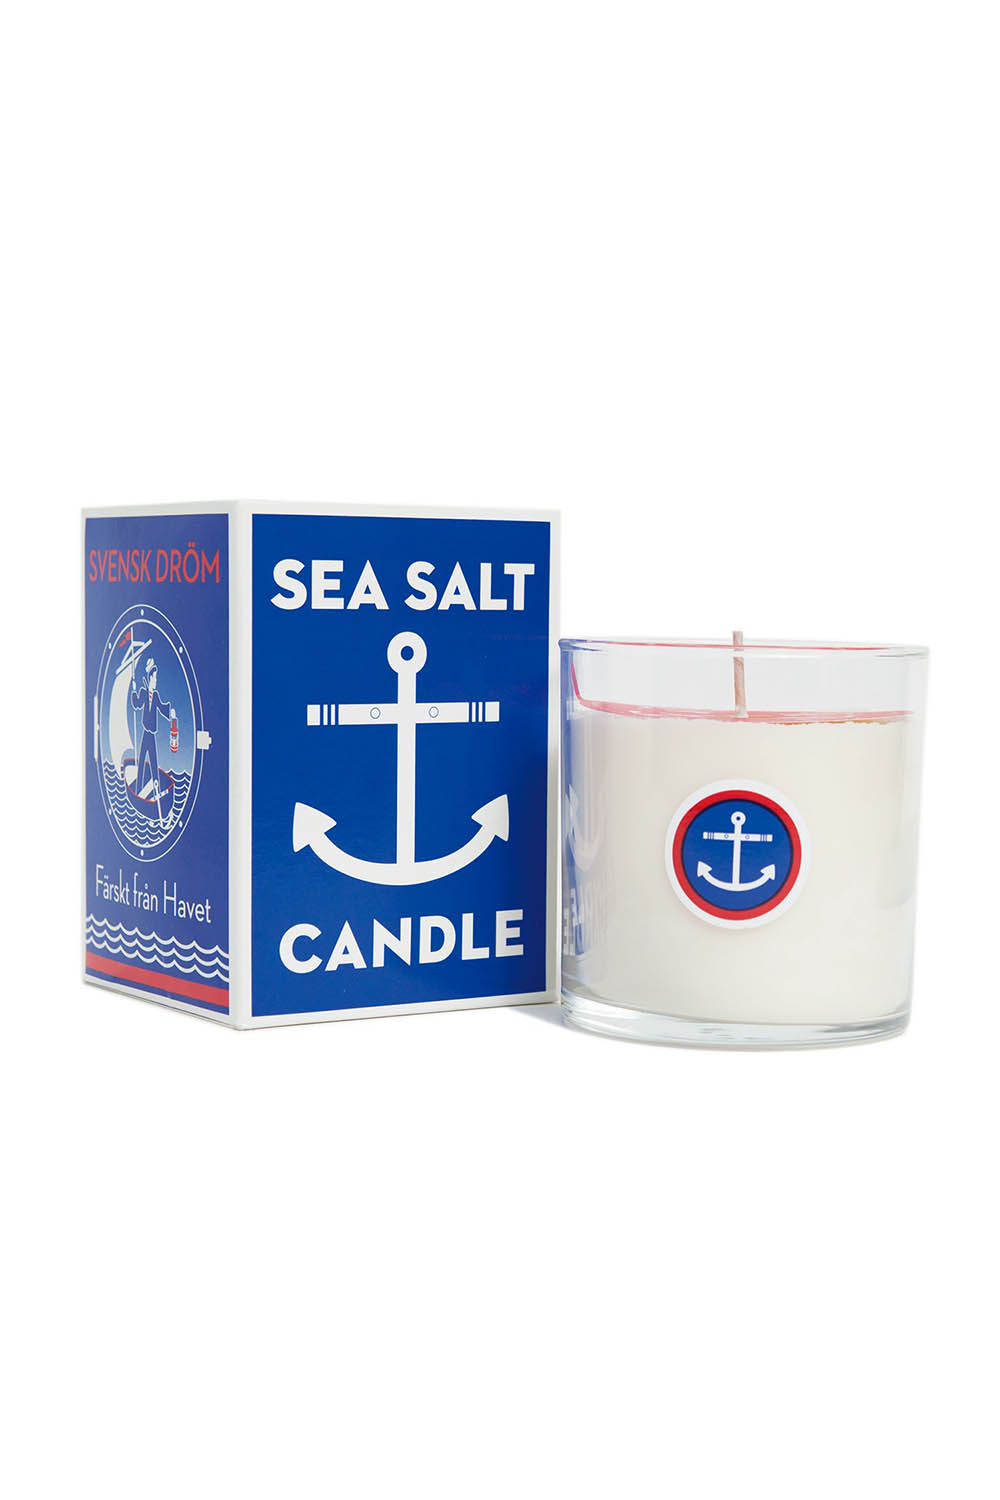 Swedish Dream Candle - Sea Salt